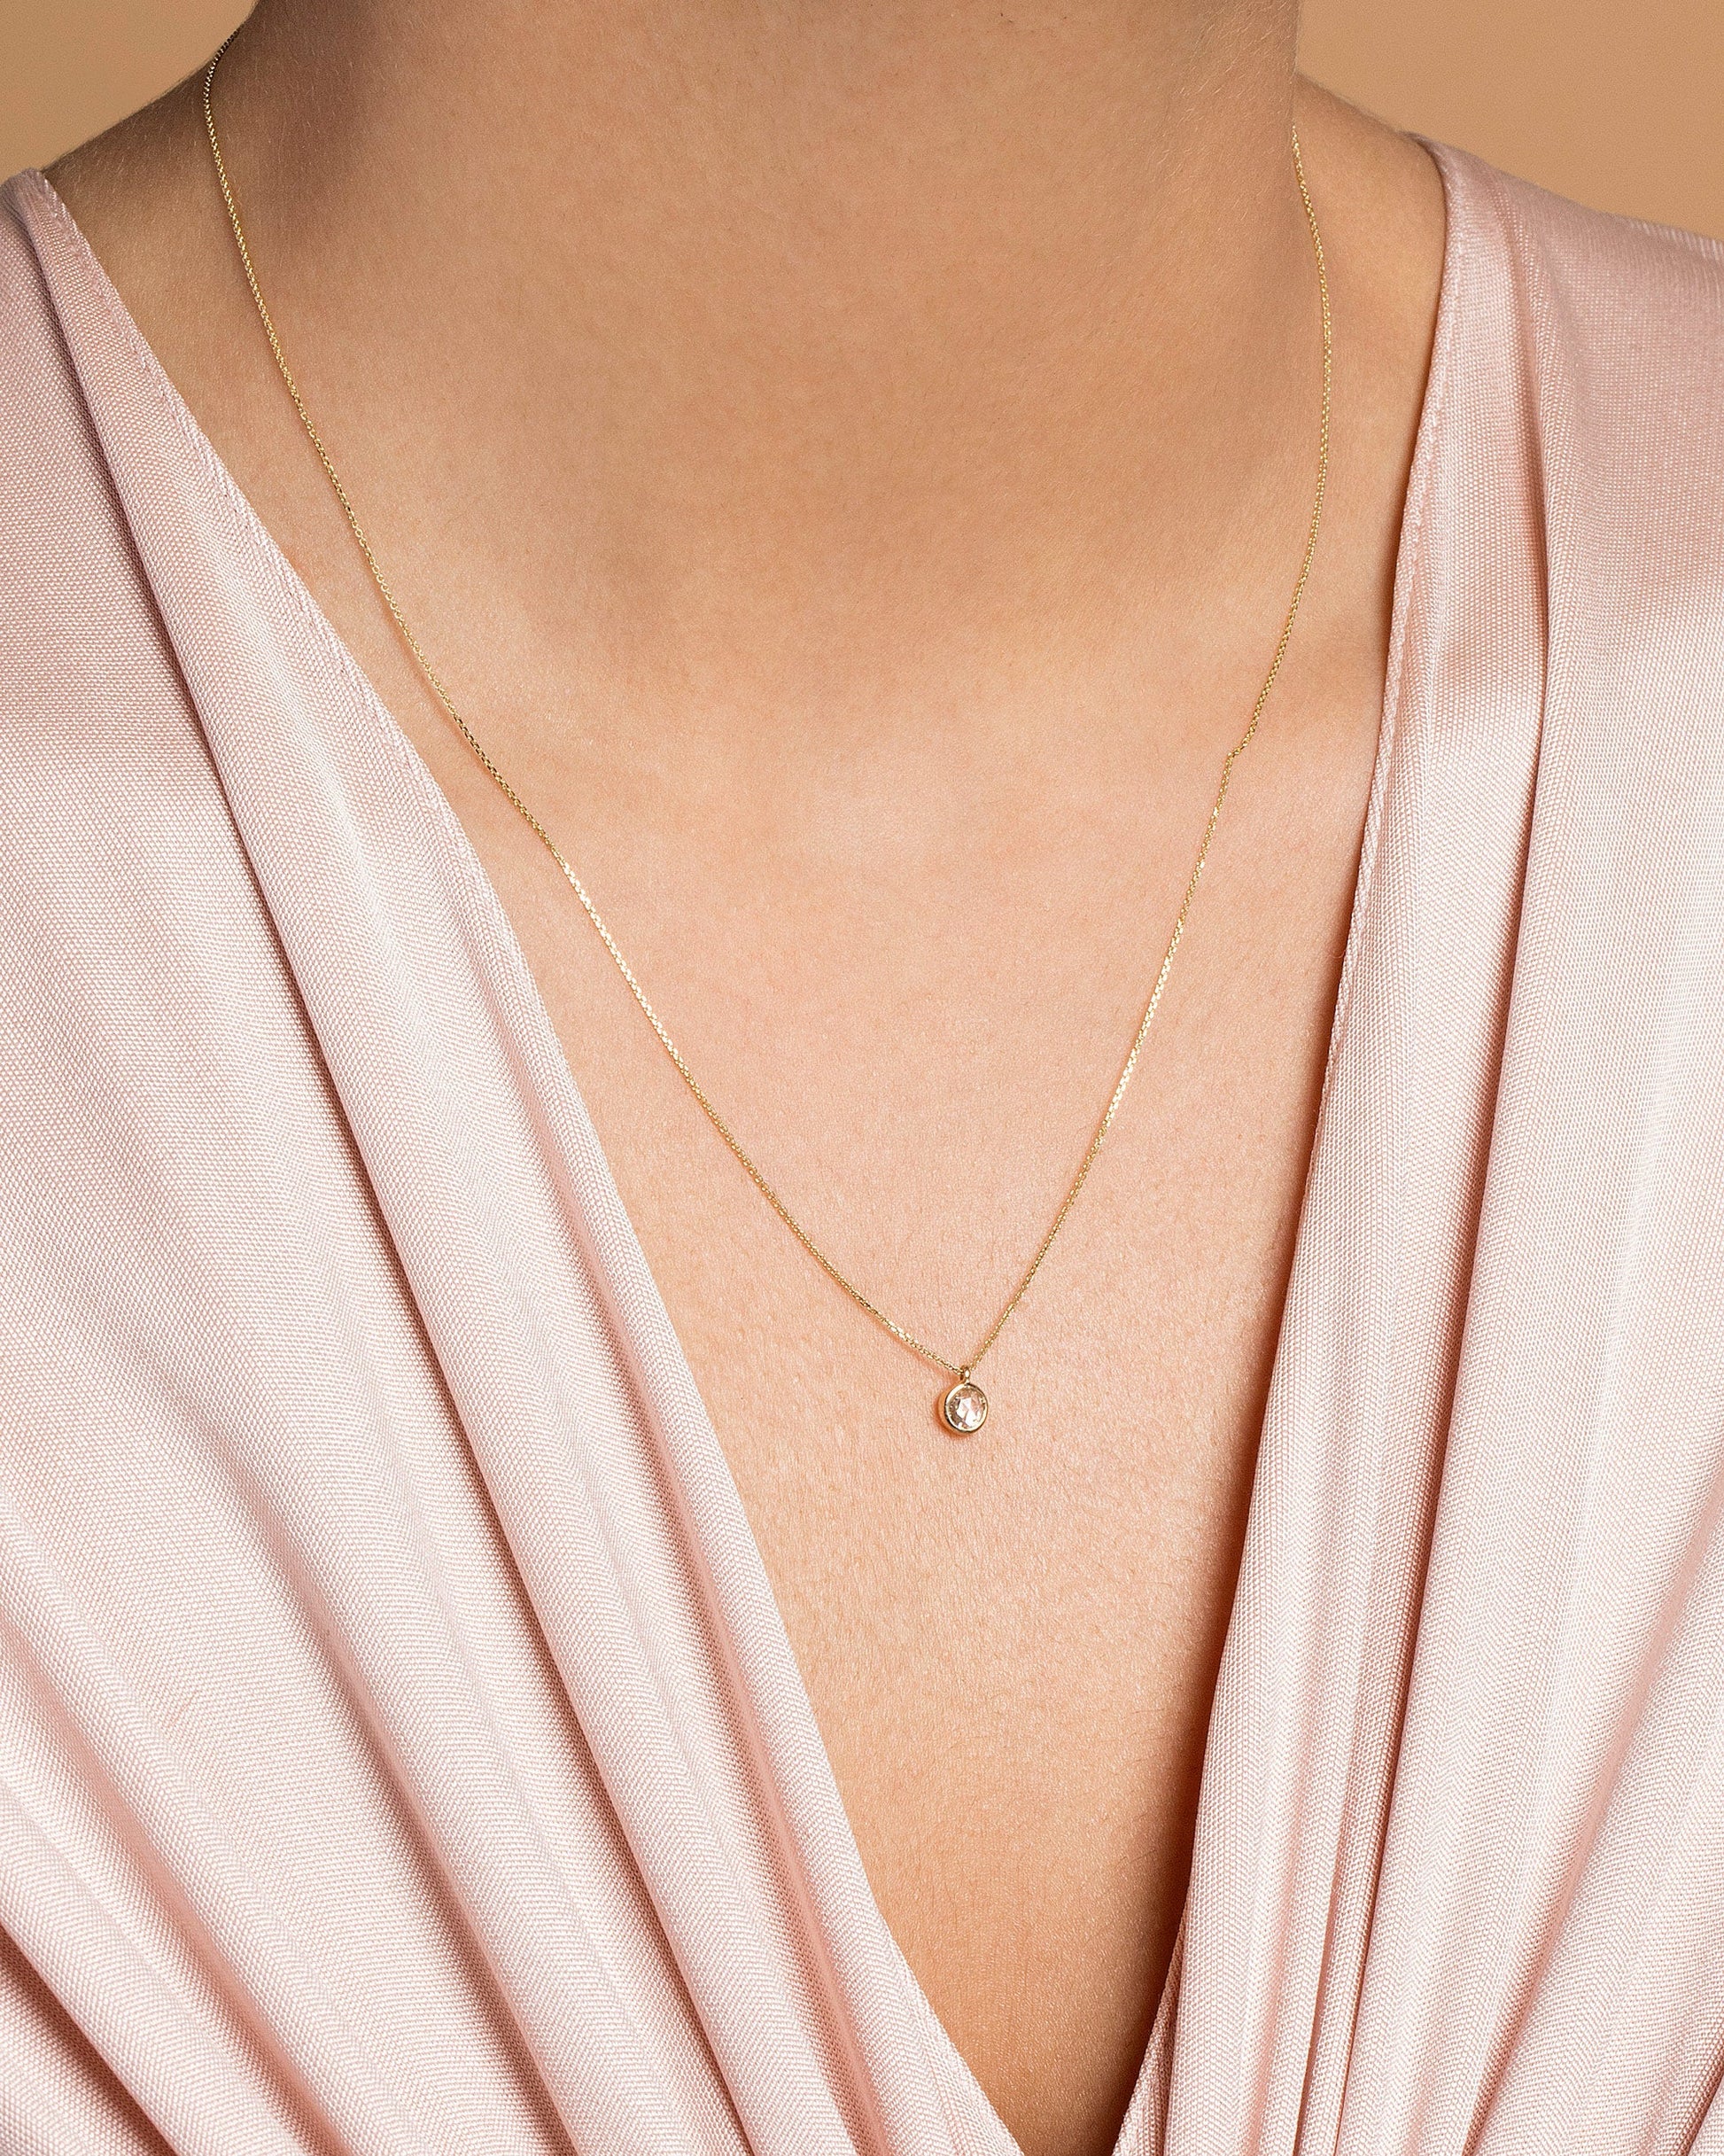 Diamond Birthstone Necklace on model.